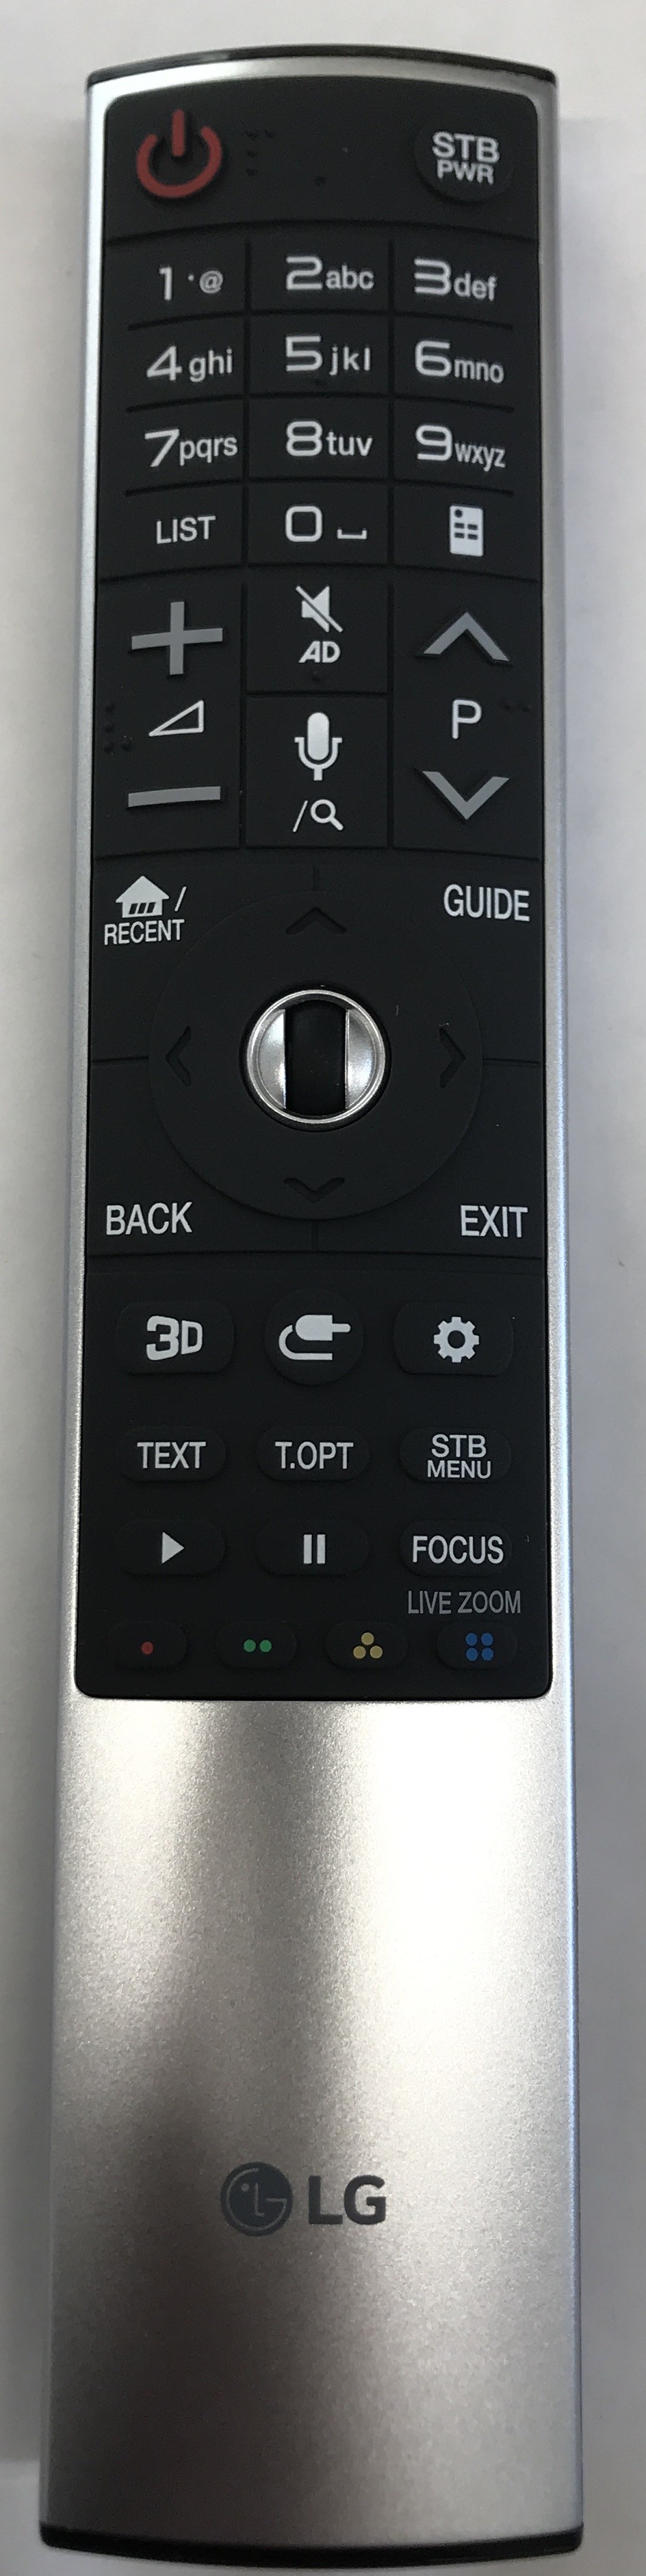 LG AKB74495316 Magic Remote Control Original